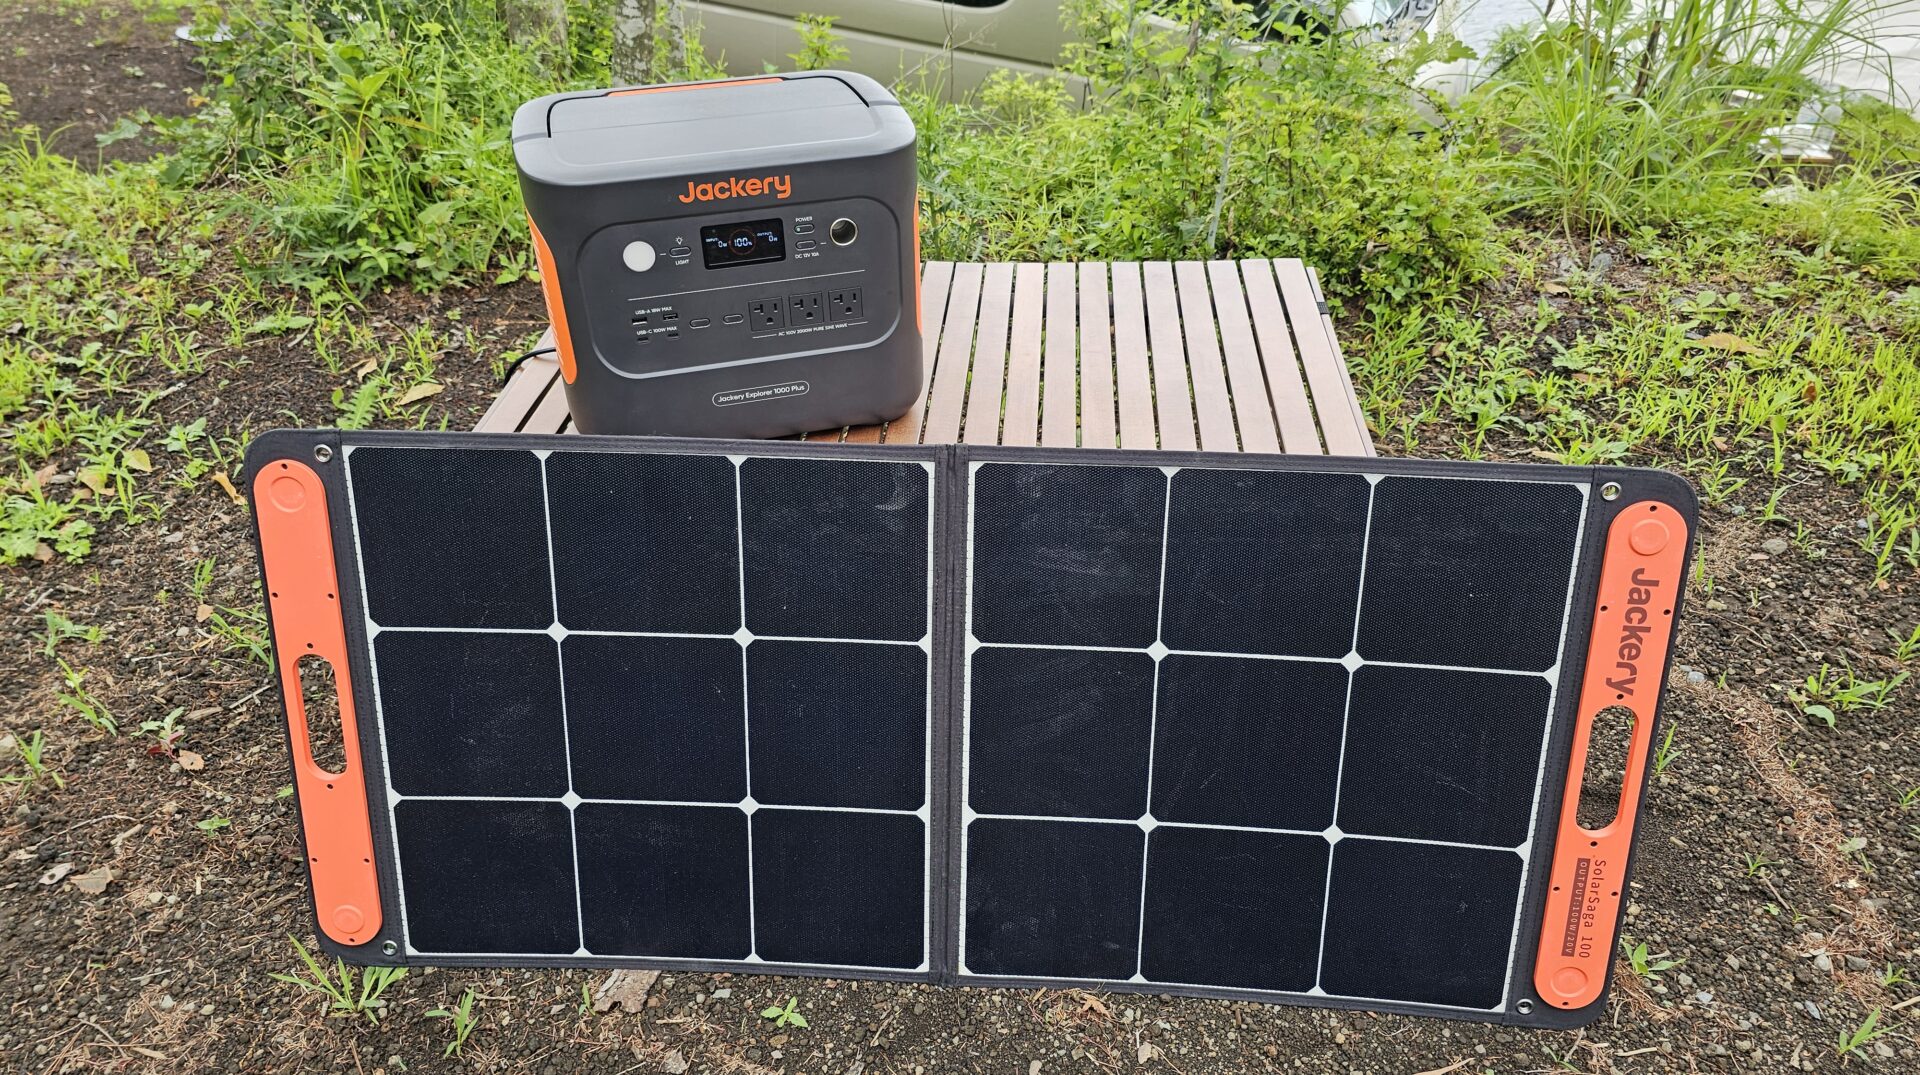 Jackery Solar Generator 1000 Plus